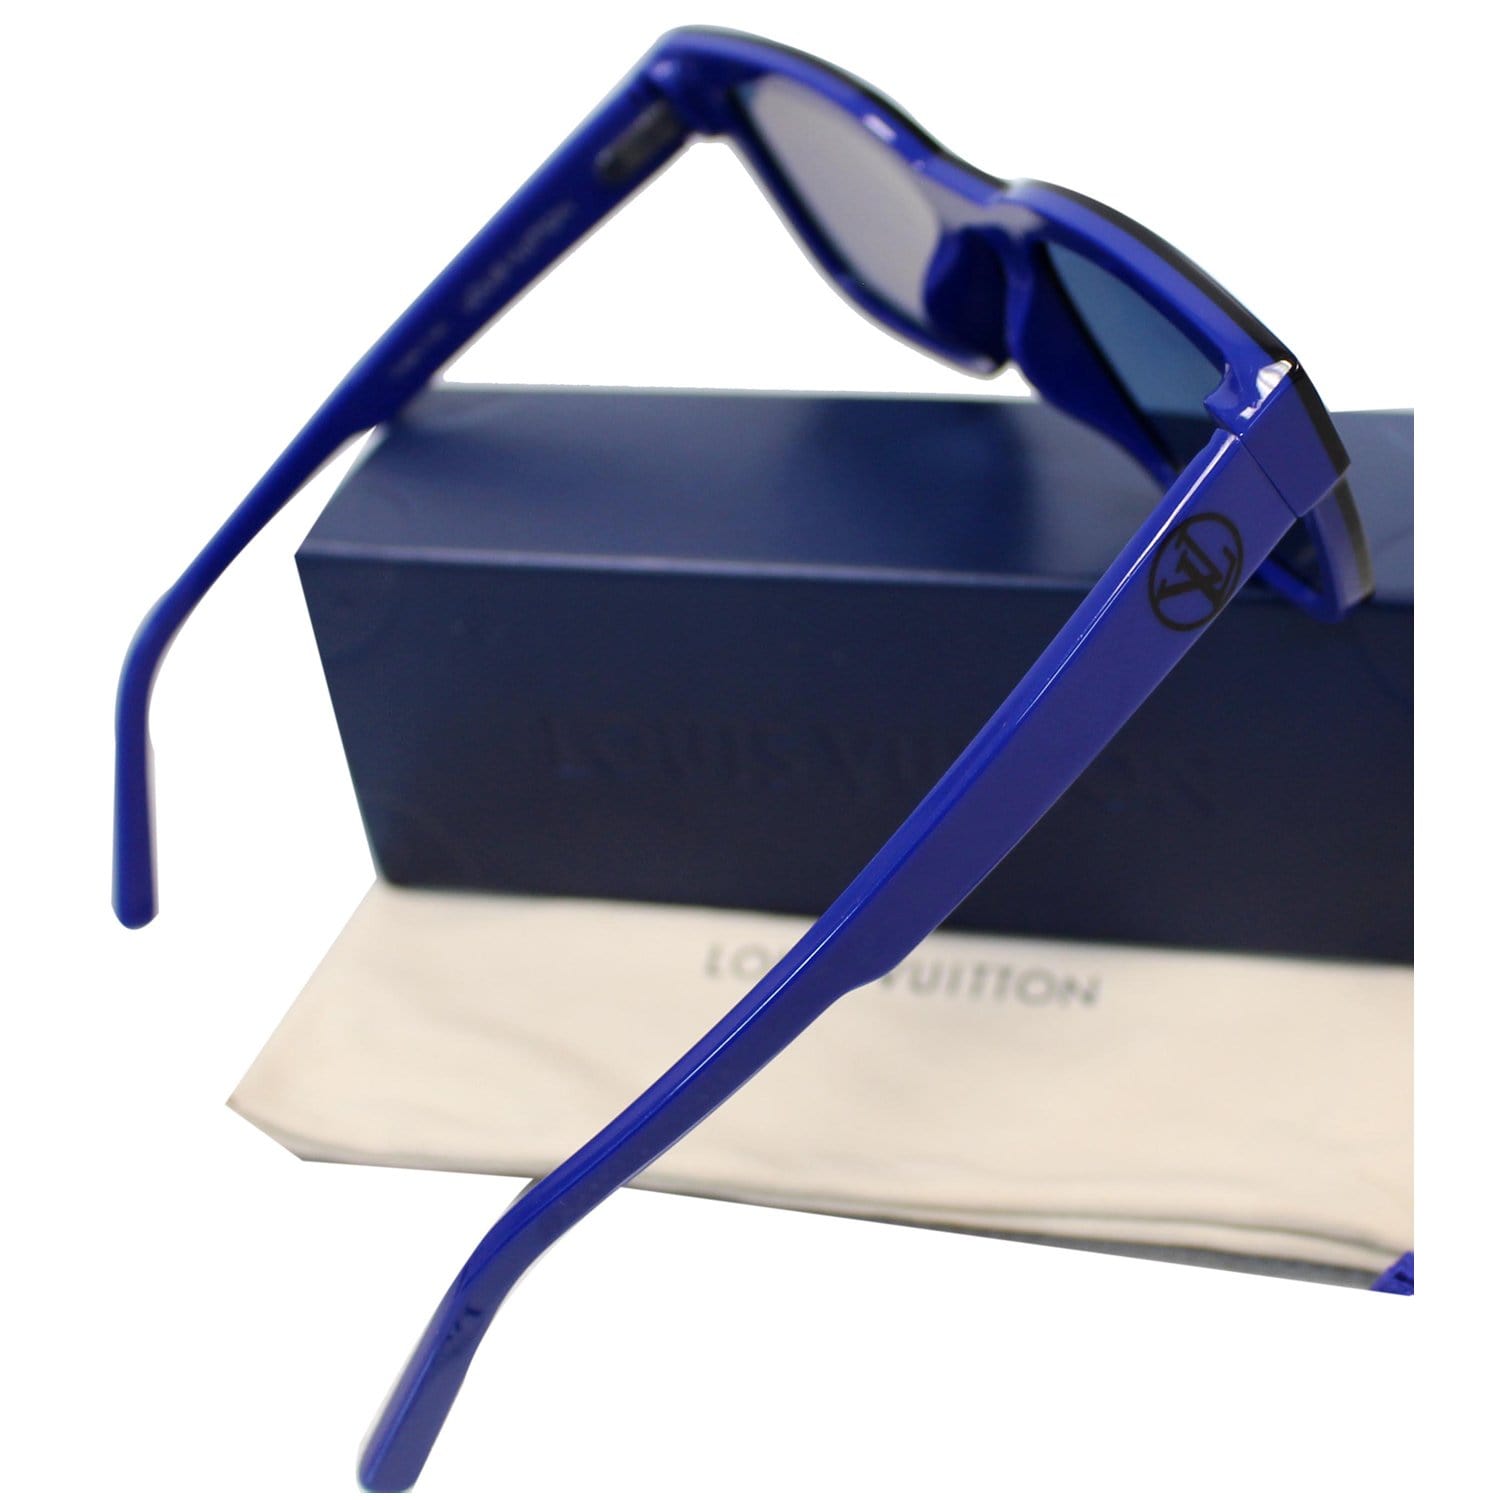 Louis Vuitton Men's Sunglasses Z1597E Black Frame/Clear Lens LV W/Box